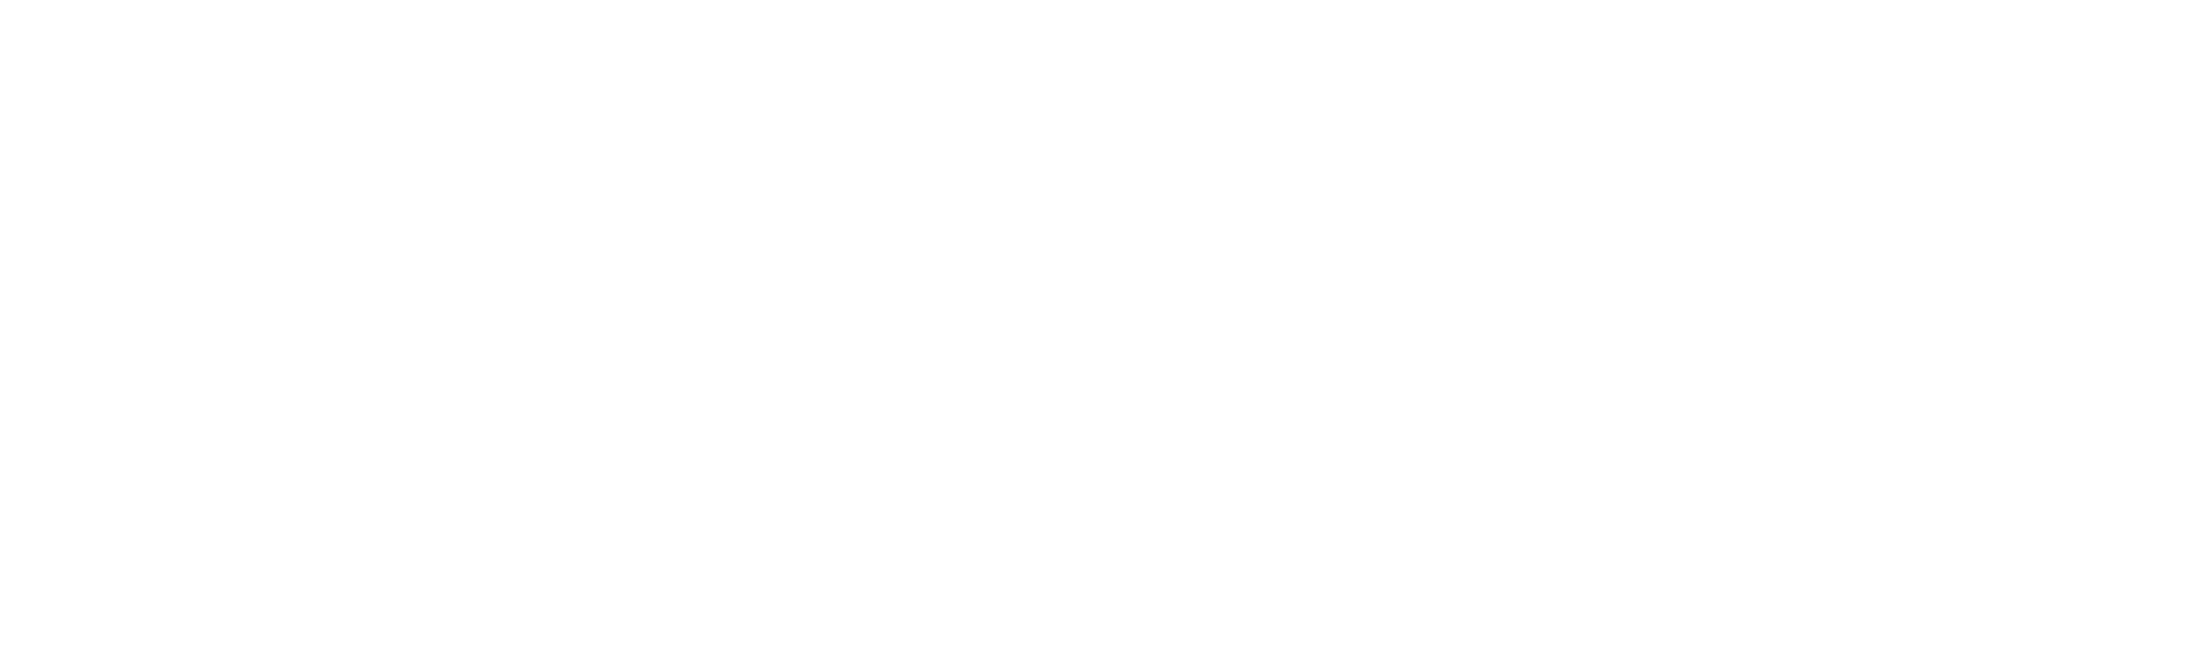 Arlington Residences Logo